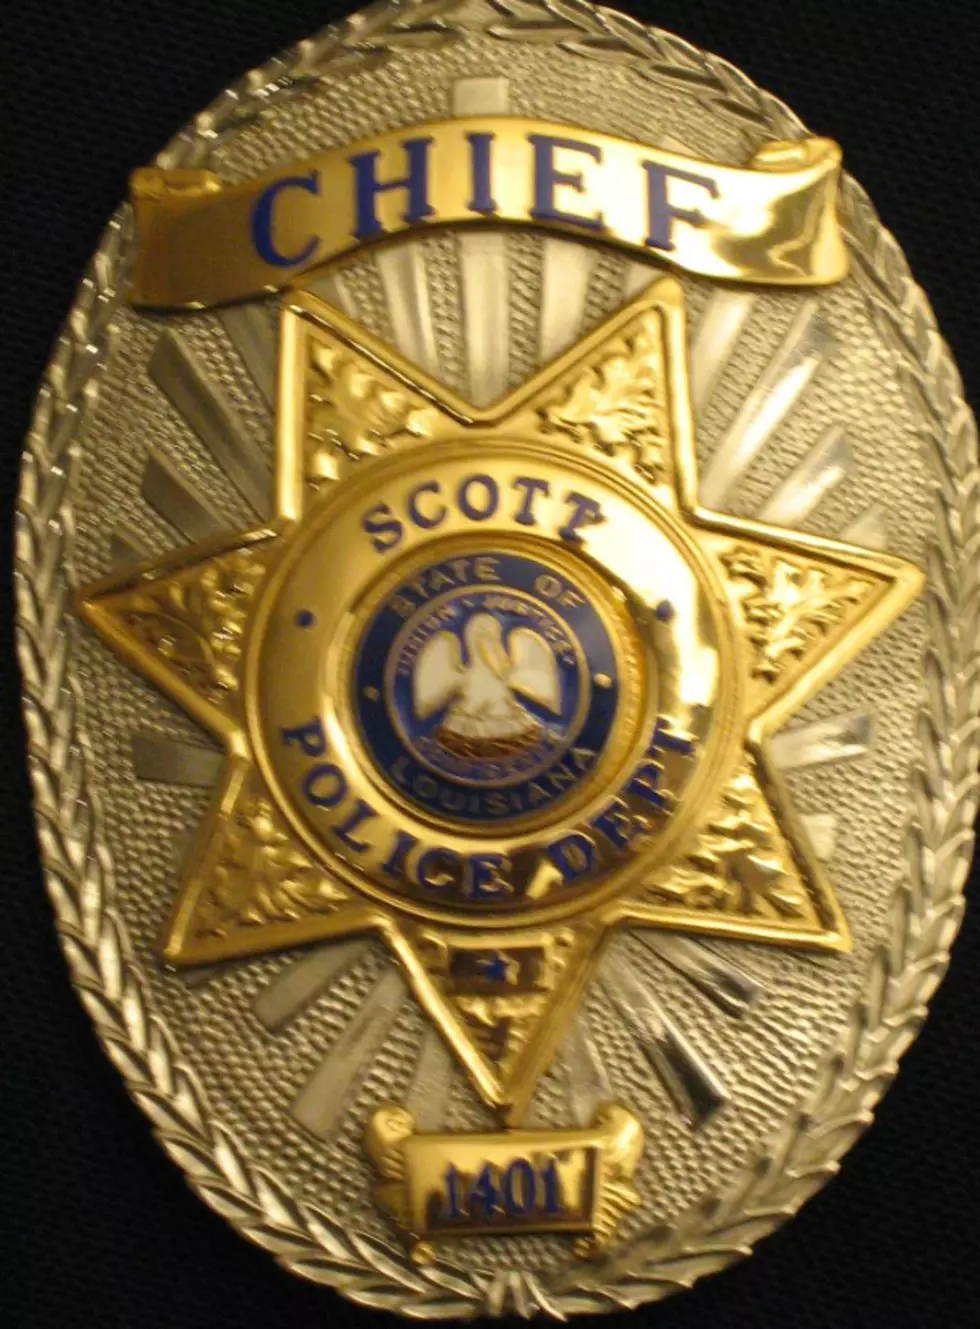 Scott Police Identify 2 Accused Trespassers